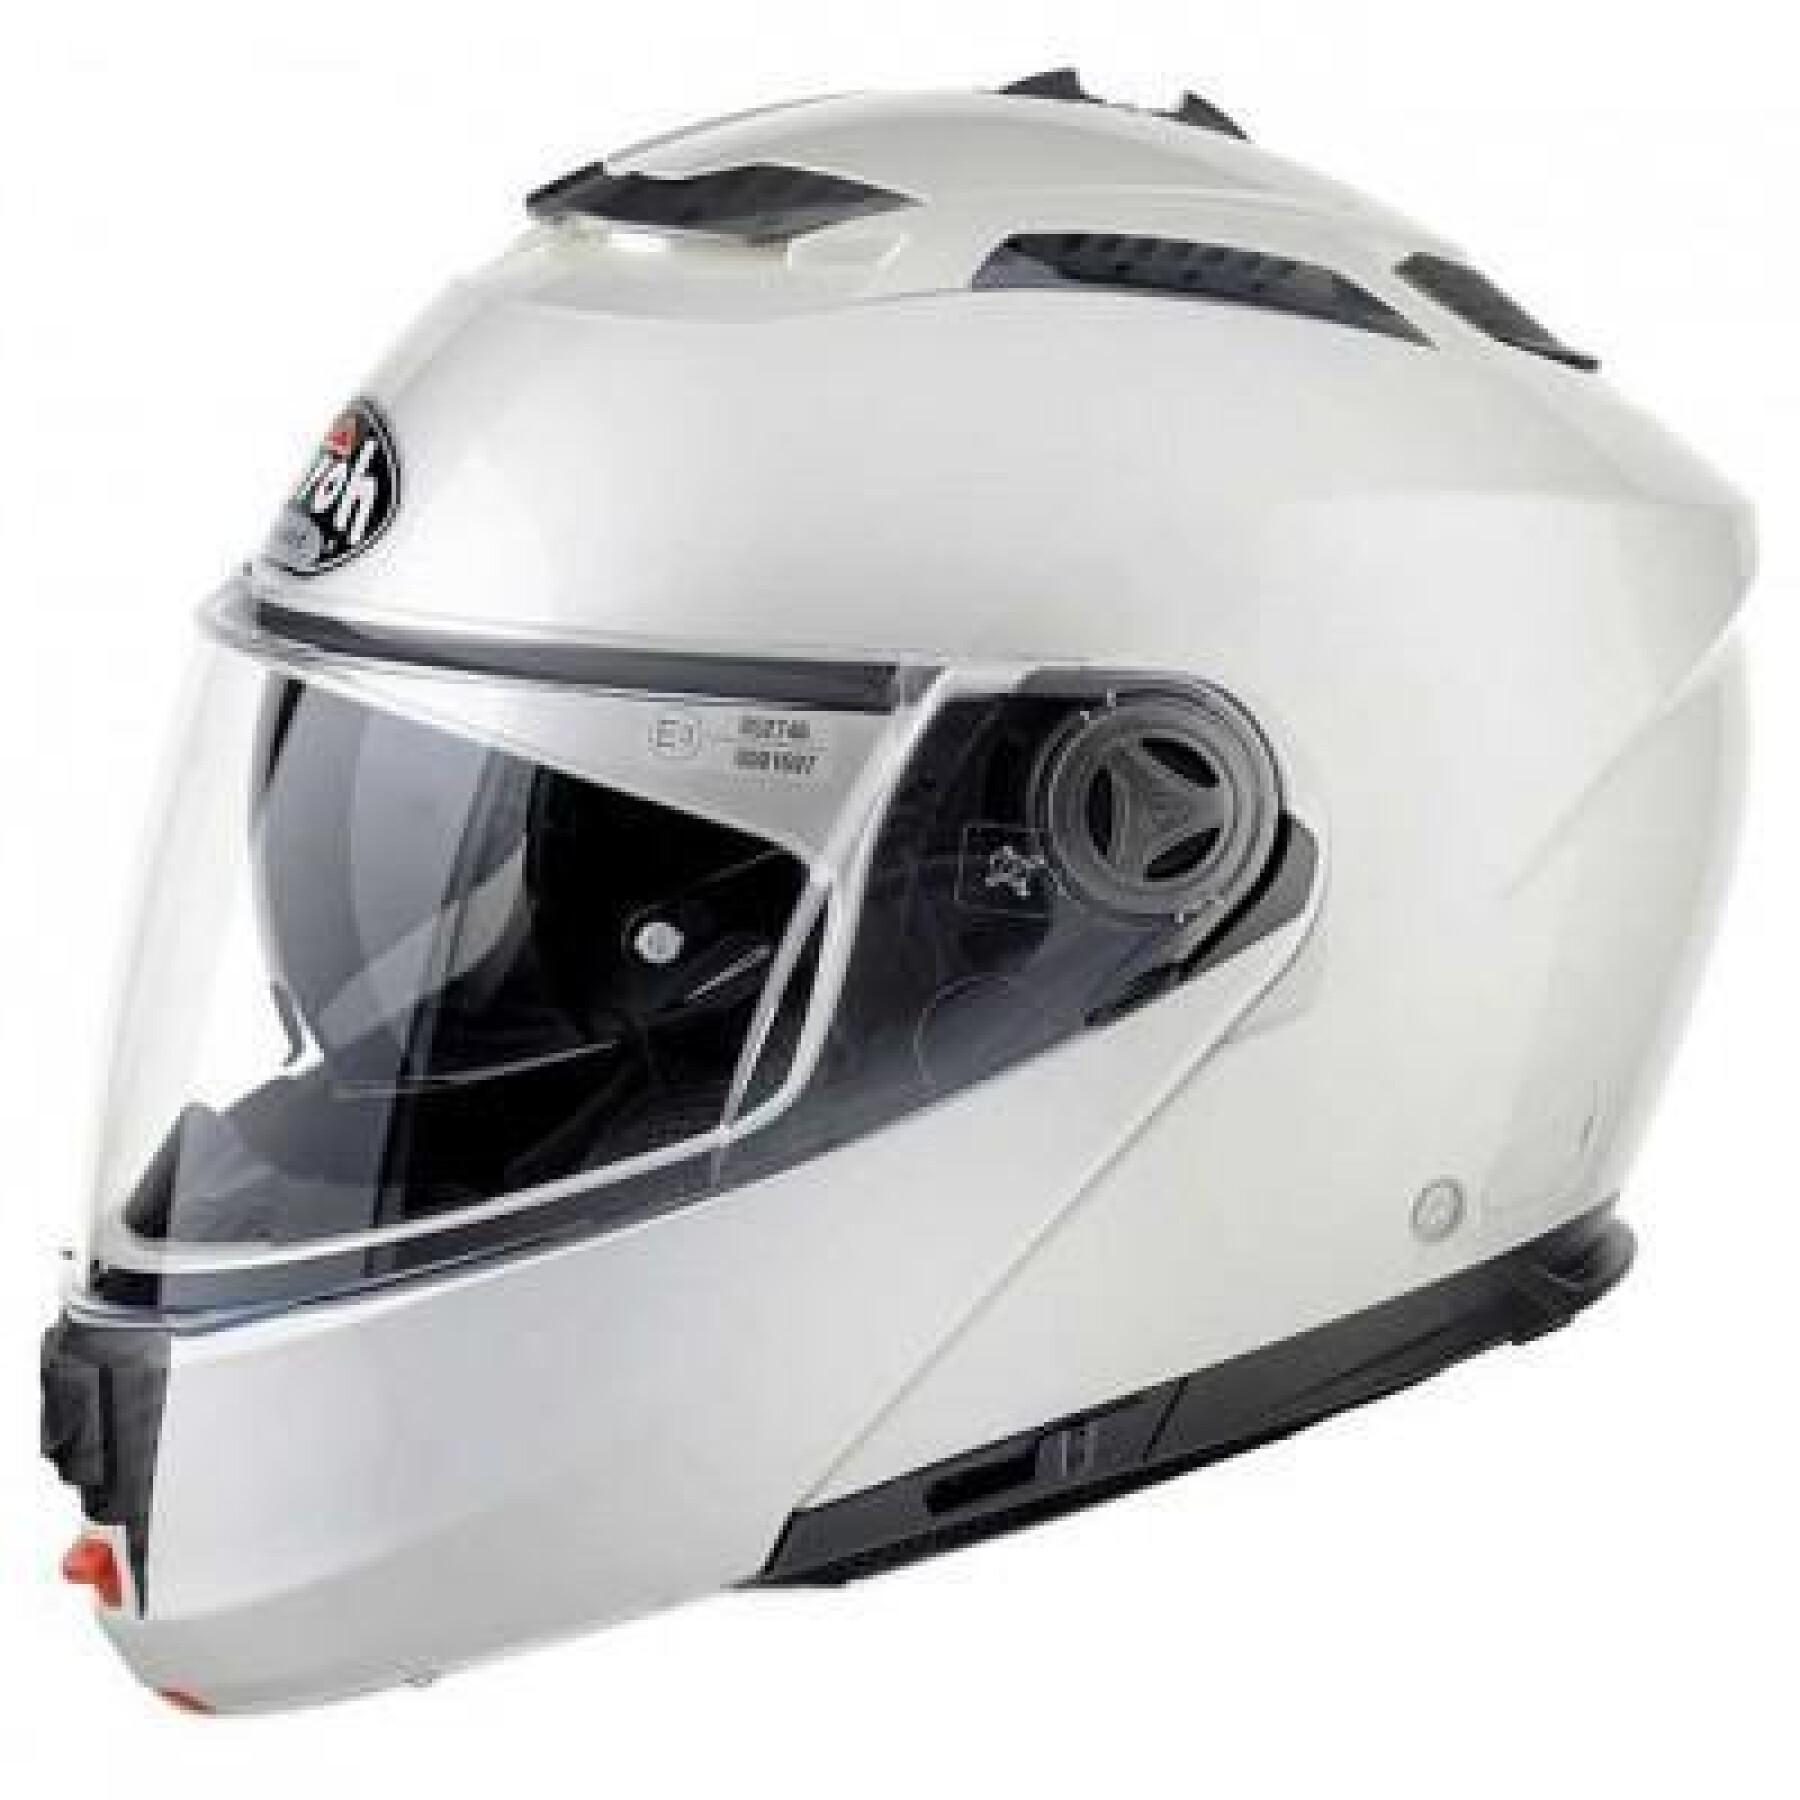 Modular motorcycle helmet Airoh Phantom-S